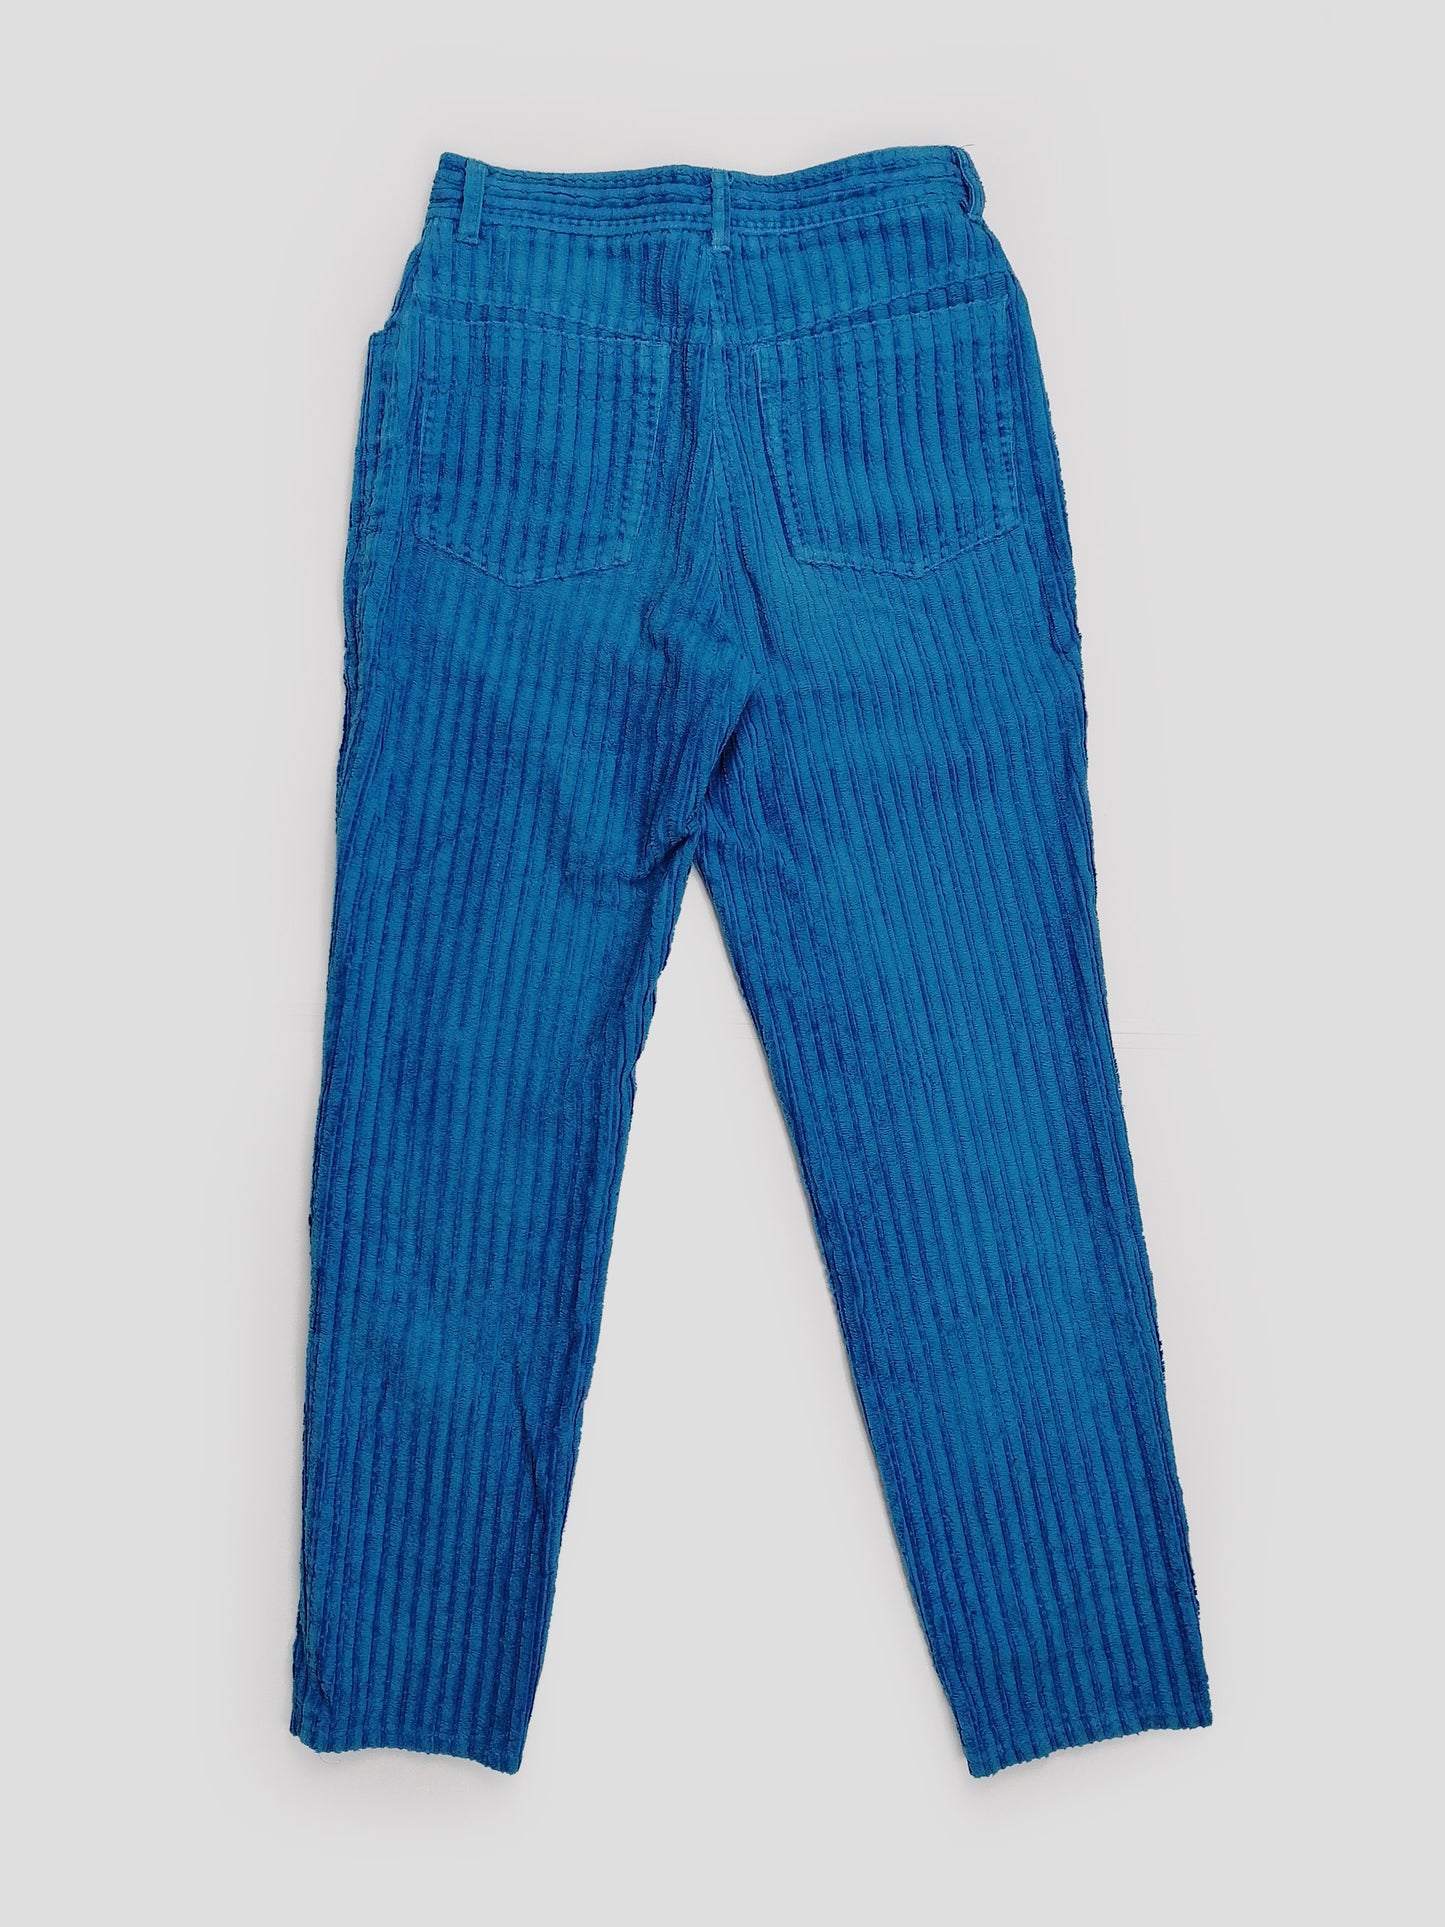 Vintage 80's High Waist Corduroy Velvet Jeans Blue - size XS-S